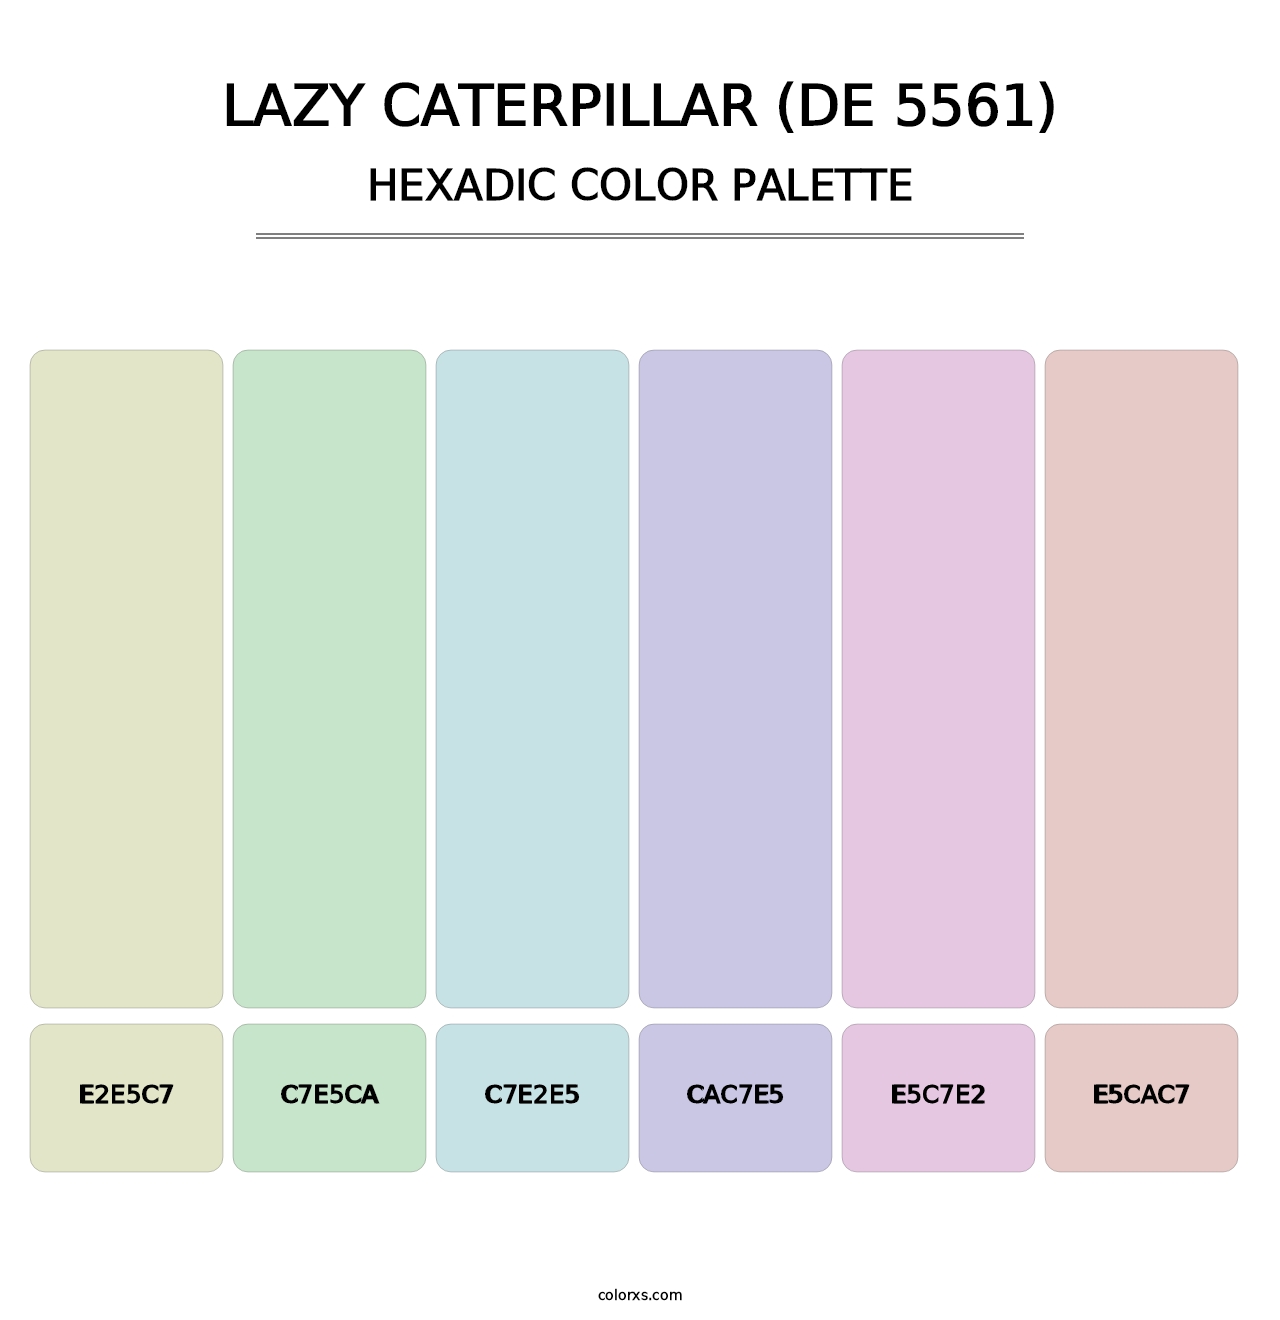 Lazy Caterpillar (DE 5561) - Hexadic Color Palette